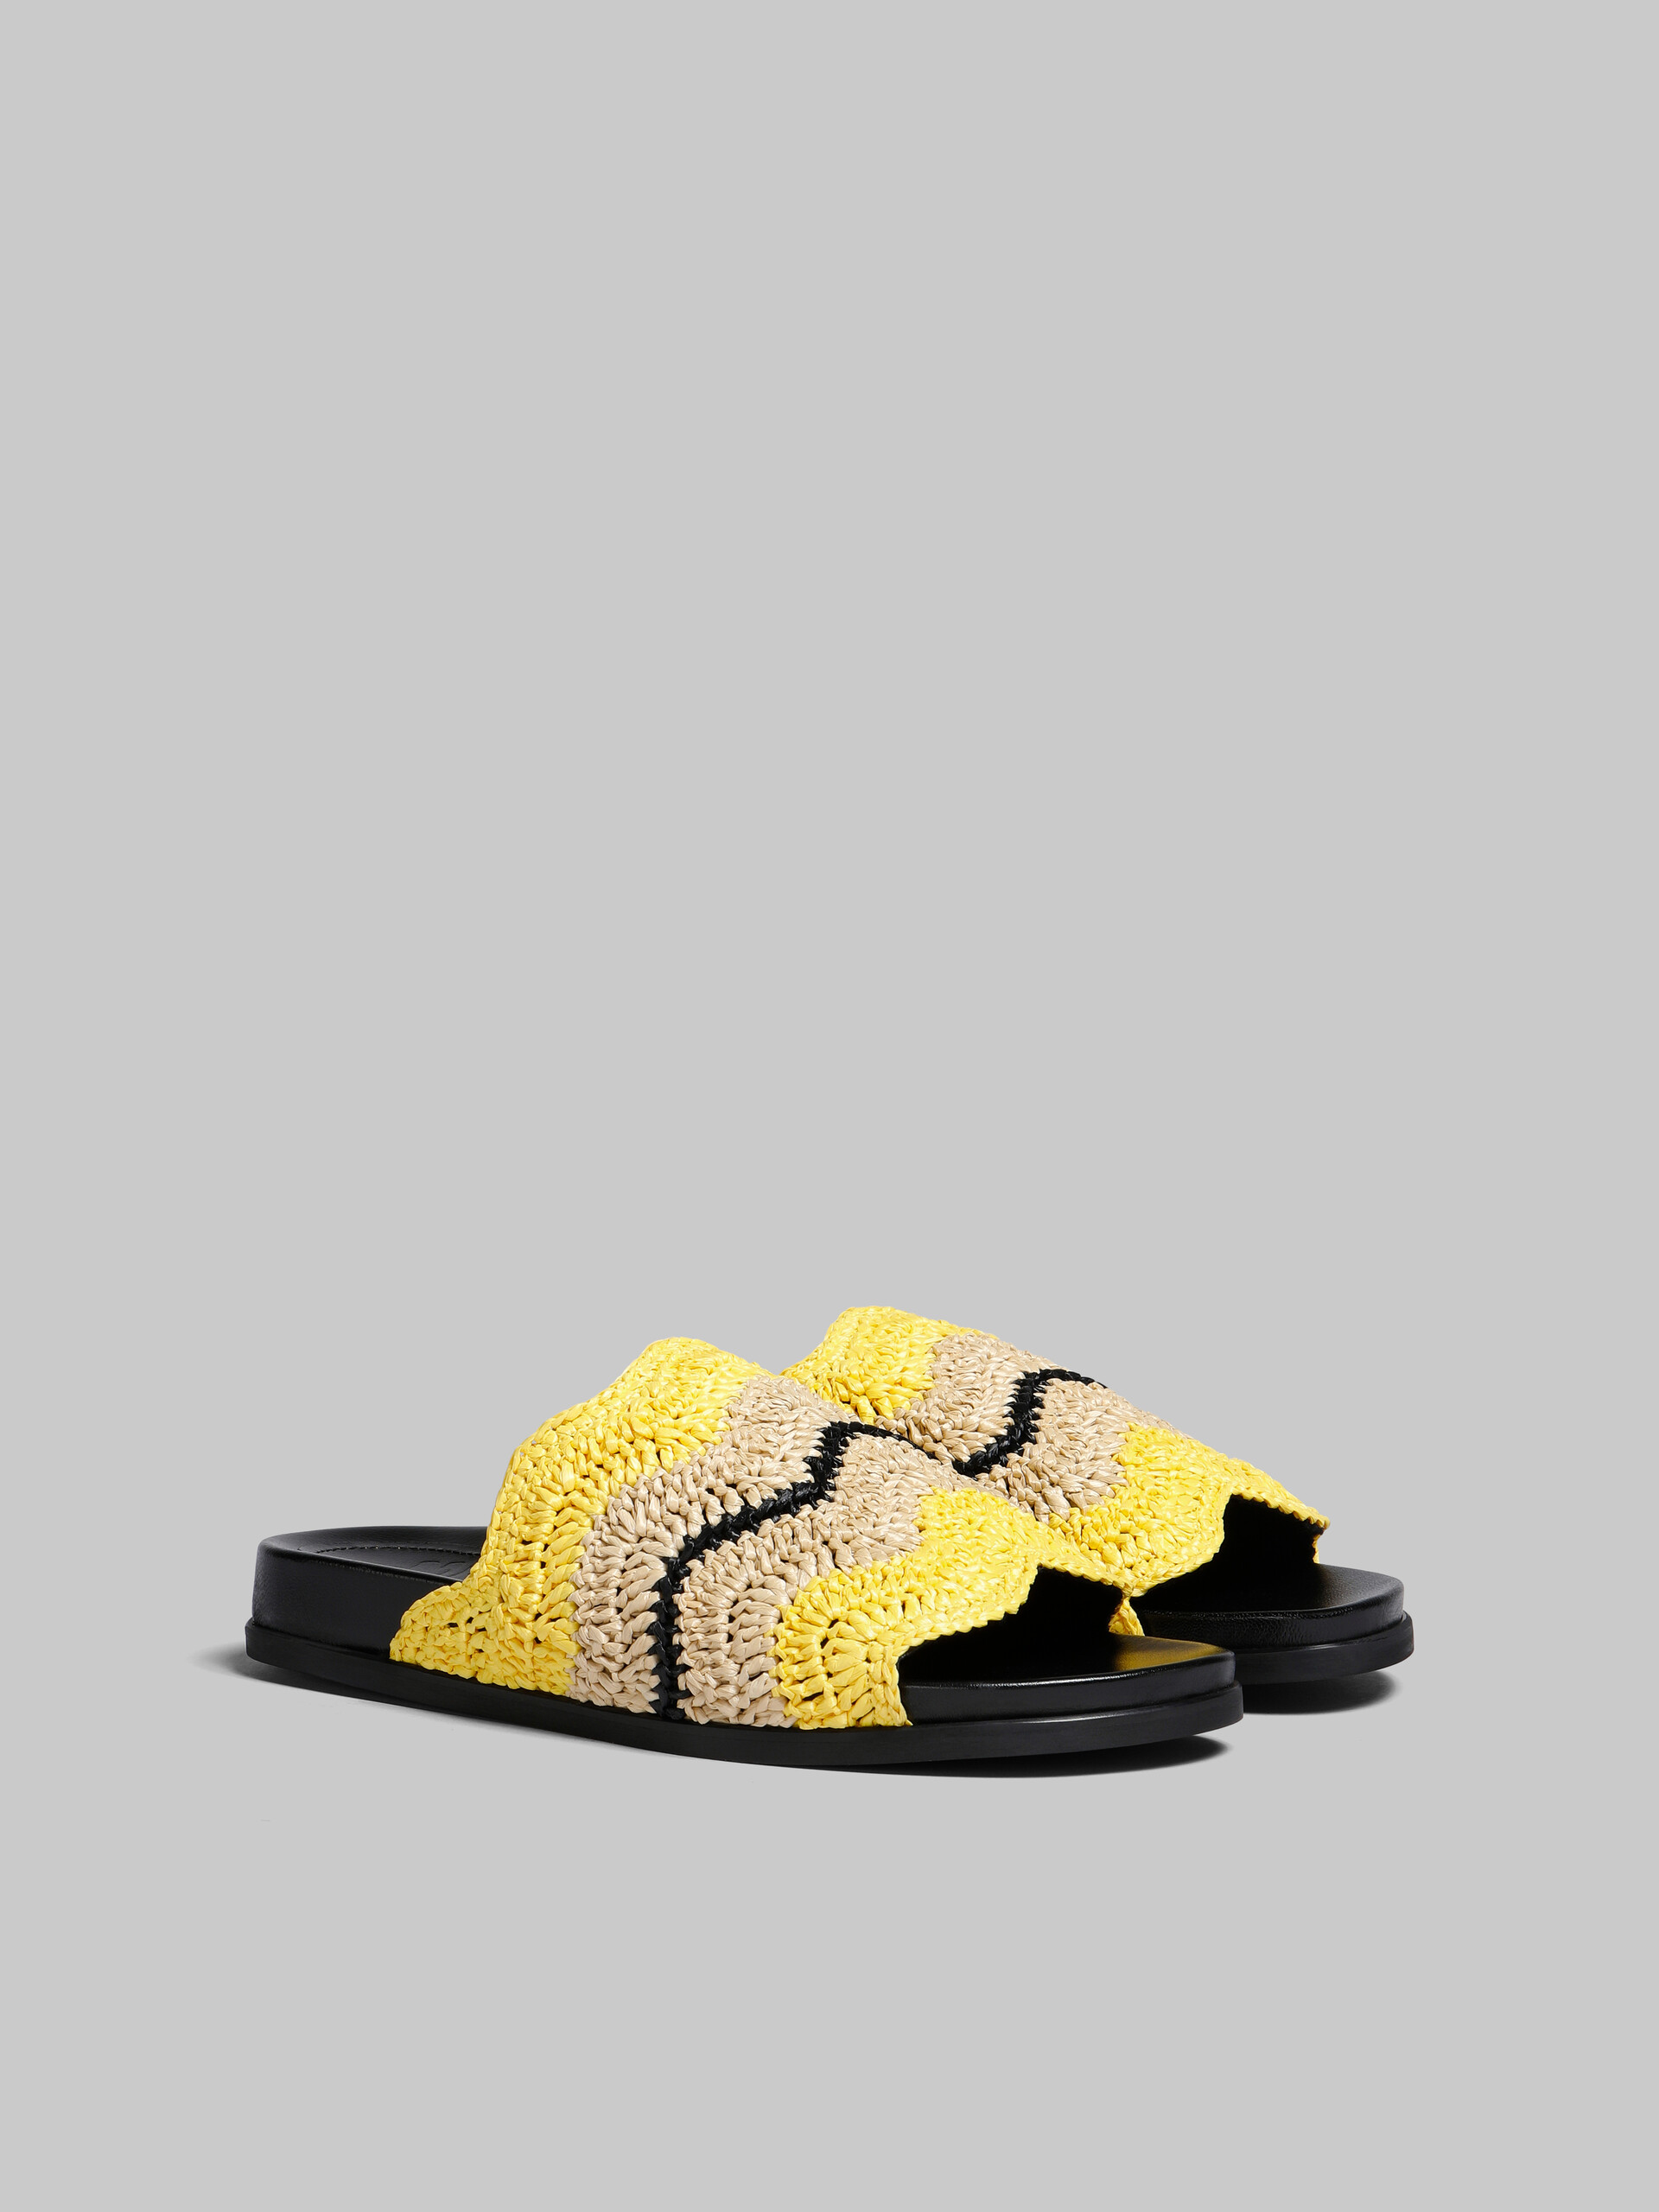 Marni x No Vacancy Inn - Yellow crochet raffia slide - Sandals - Image 2